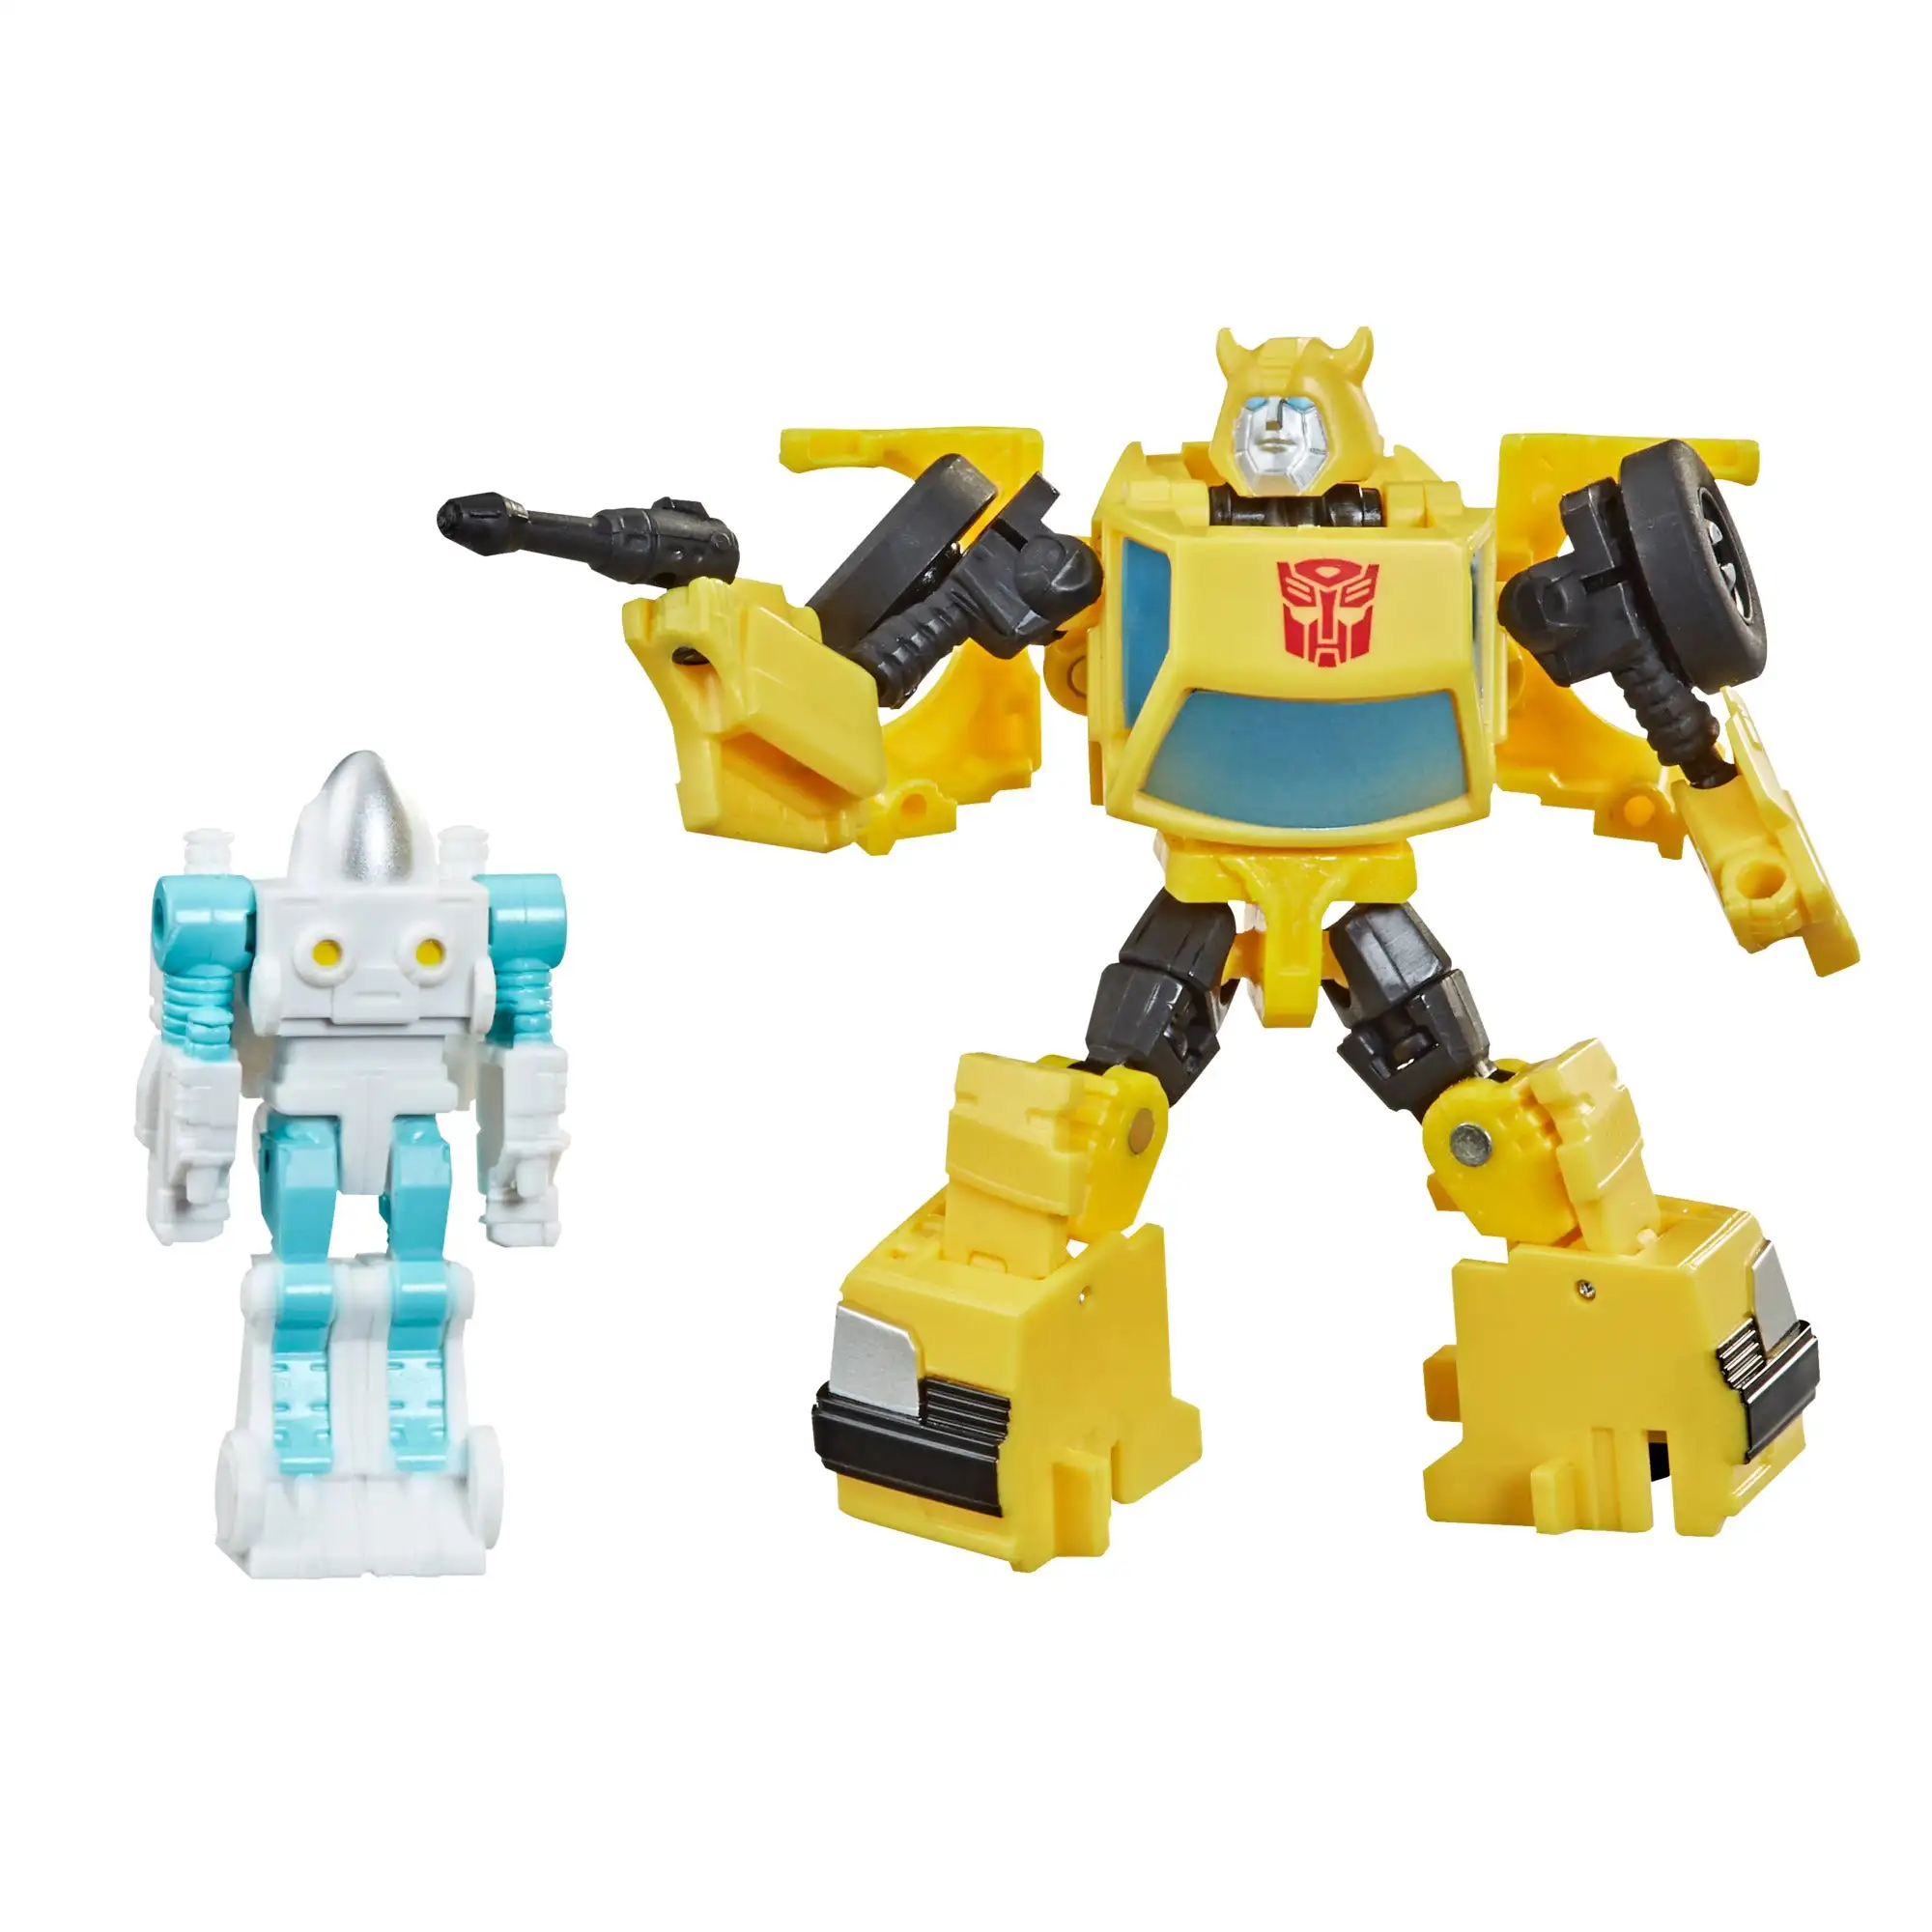 

Трансформеры Hasbro Buzzworthy War для Cybertron Core Bumblebee & Спайк Witwicky 2-комплект игрушек Gift F0926